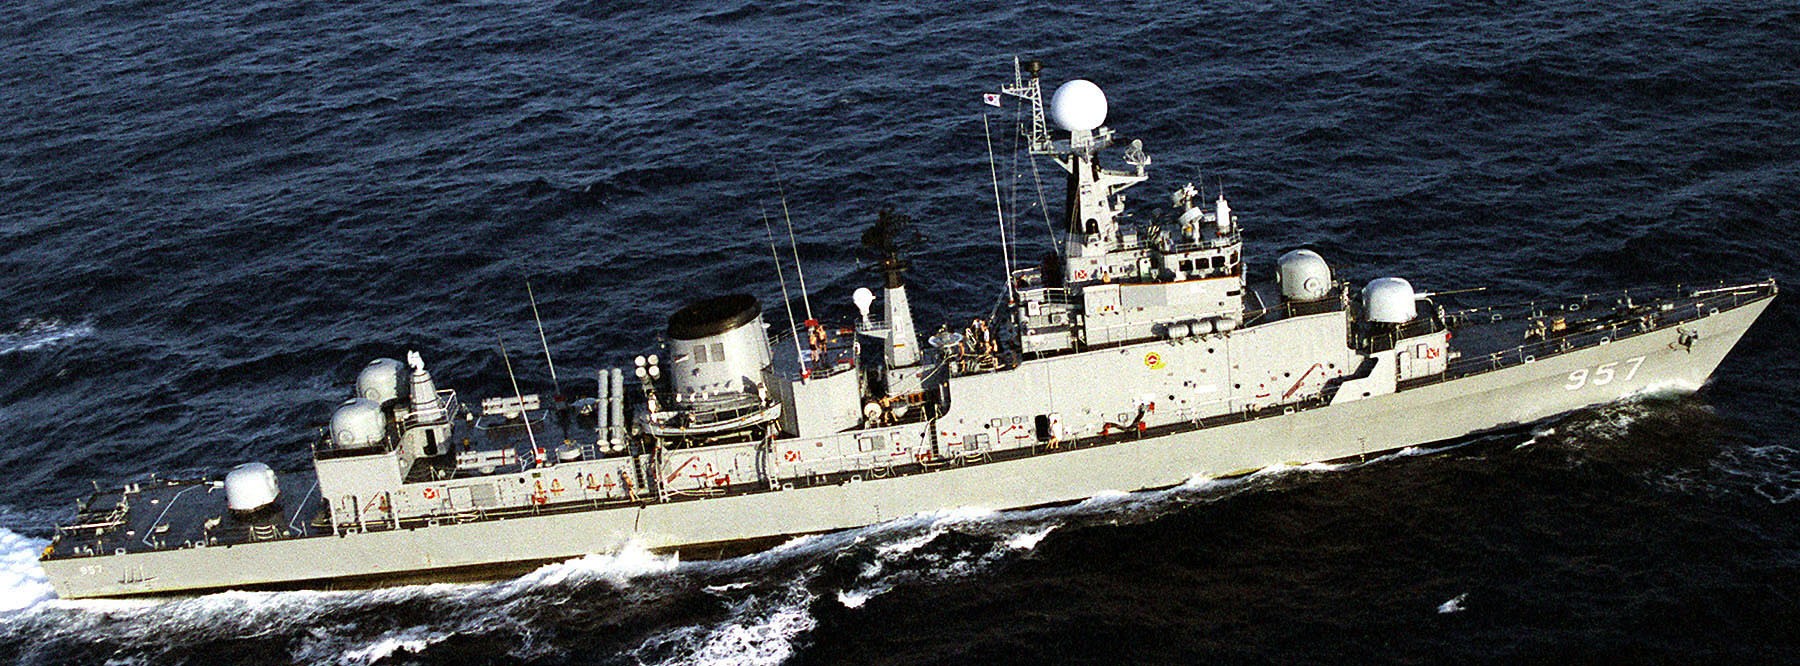 ff-957 roks jeonnam ulsan class frigate republic of korea navy rokn 04